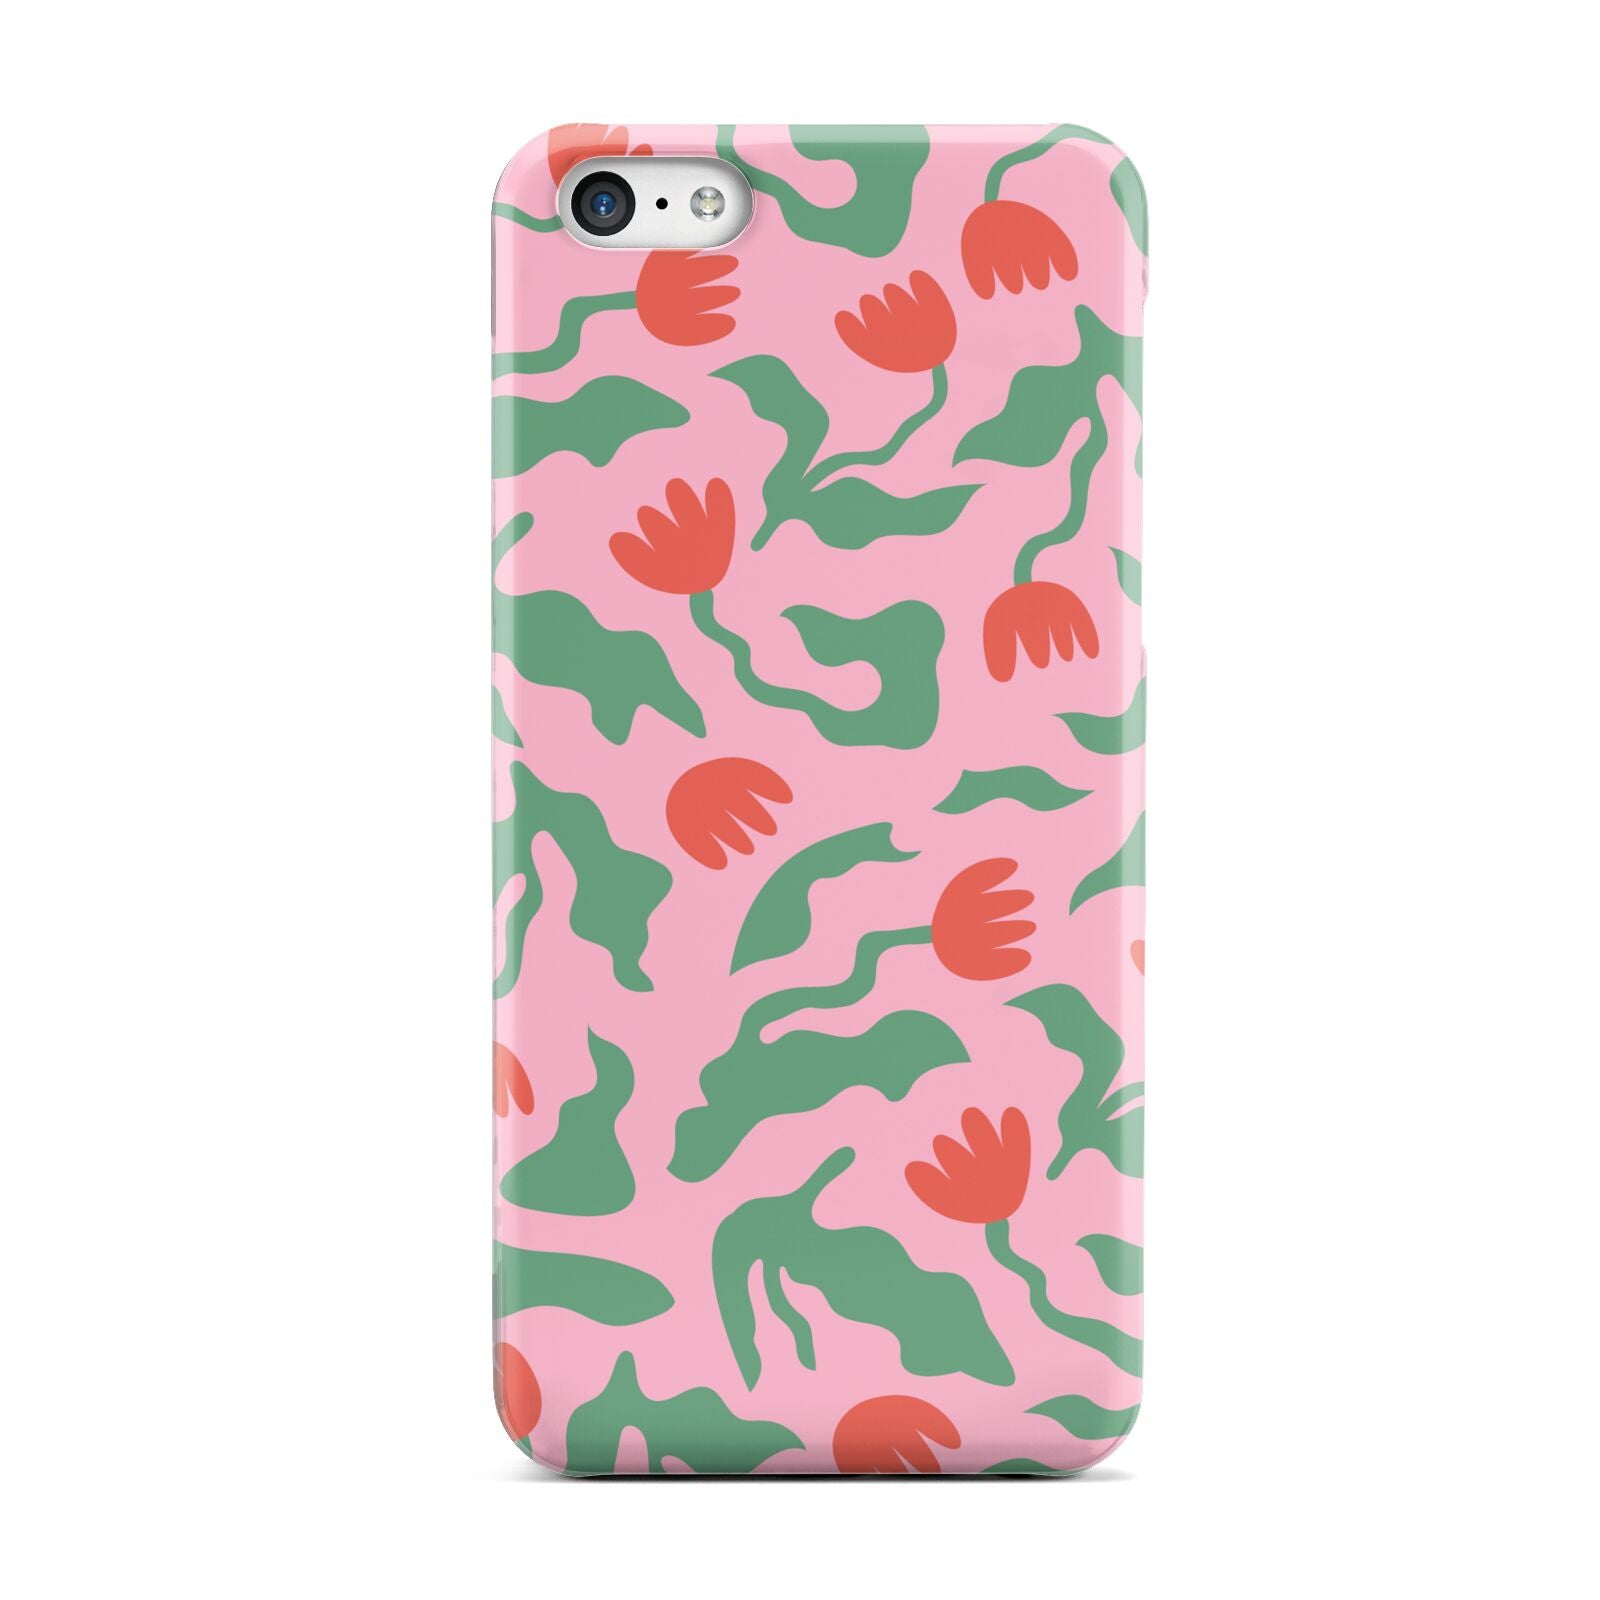 Simple Floral Apple iPhone 5c Case